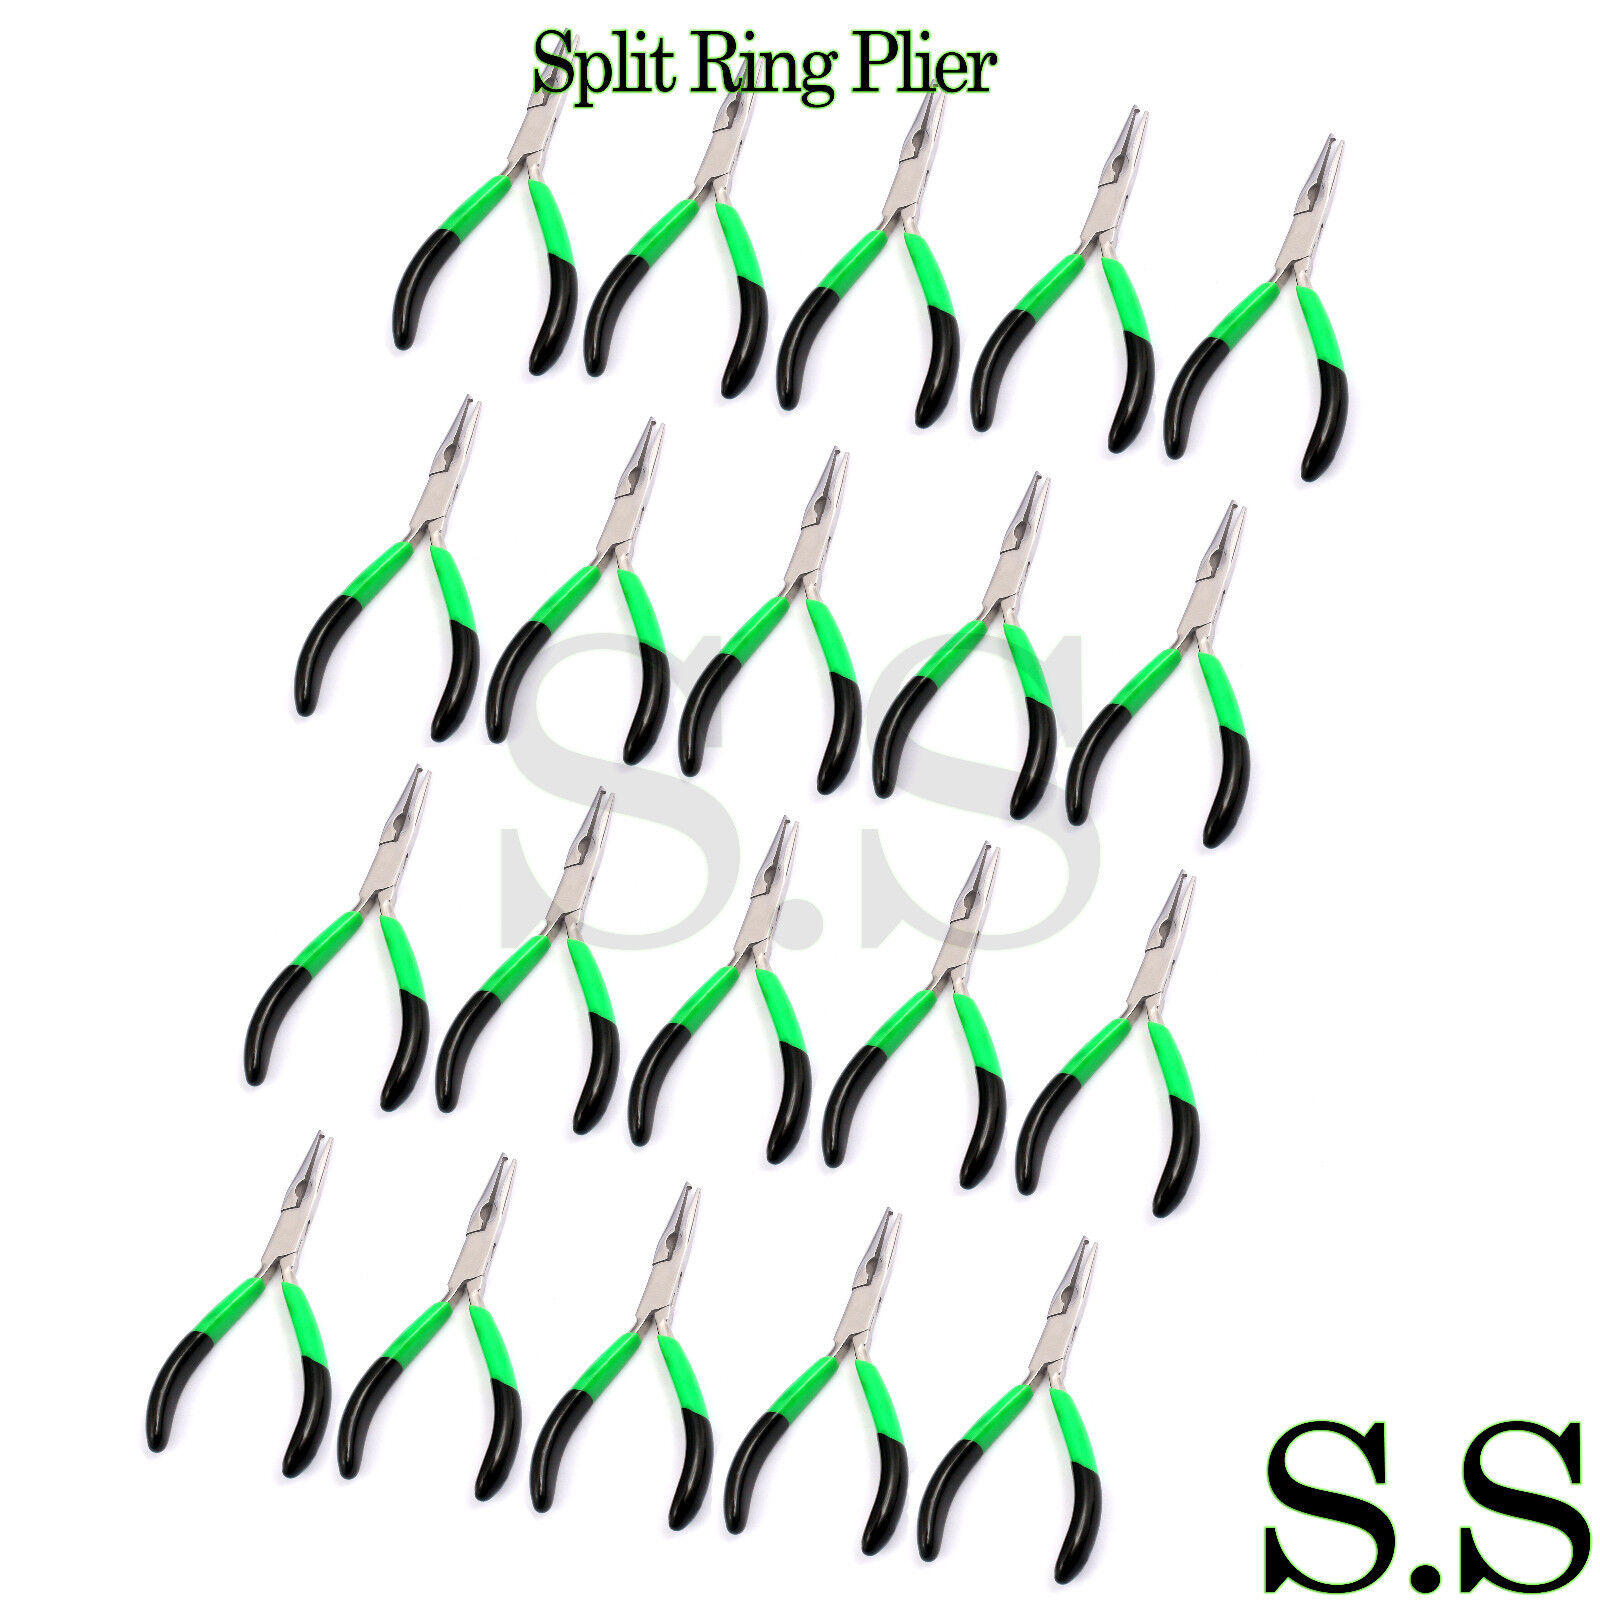 45 Pcs Split Ring Plier 5.5"  Free Shipping New Brand S.S Does Not Apply - фотография #2